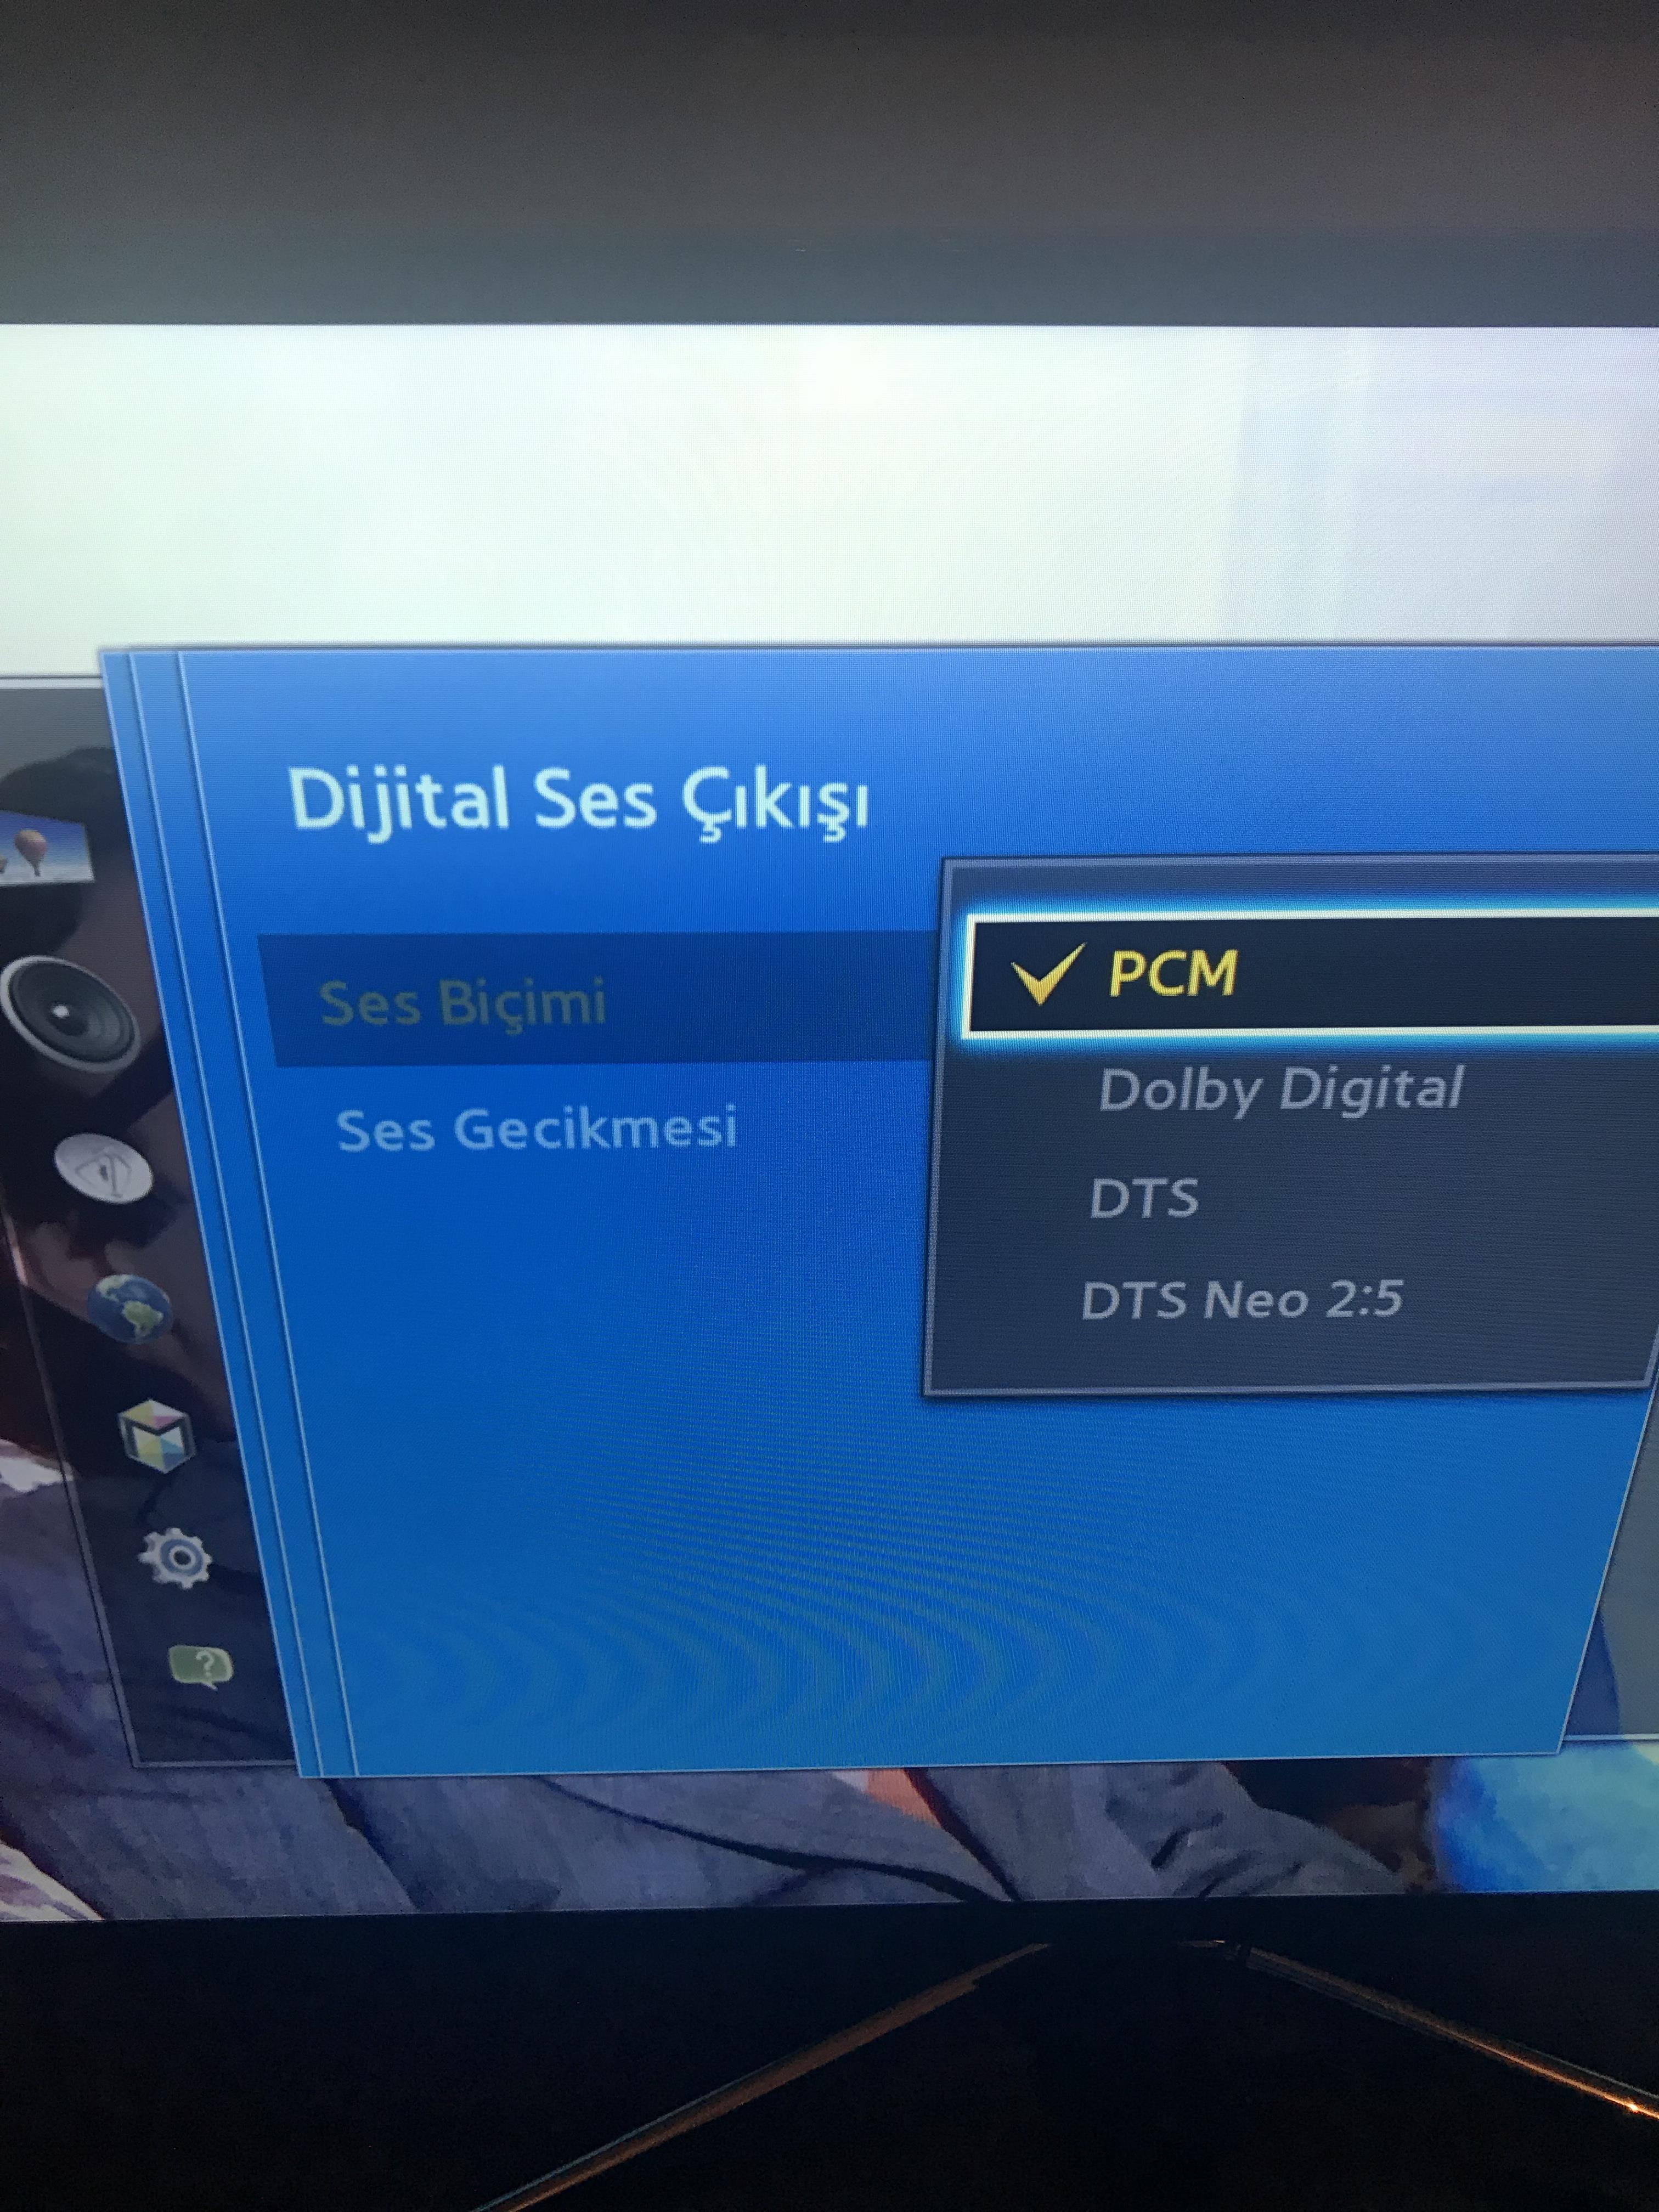 dolby digital vs dts neo 2.5